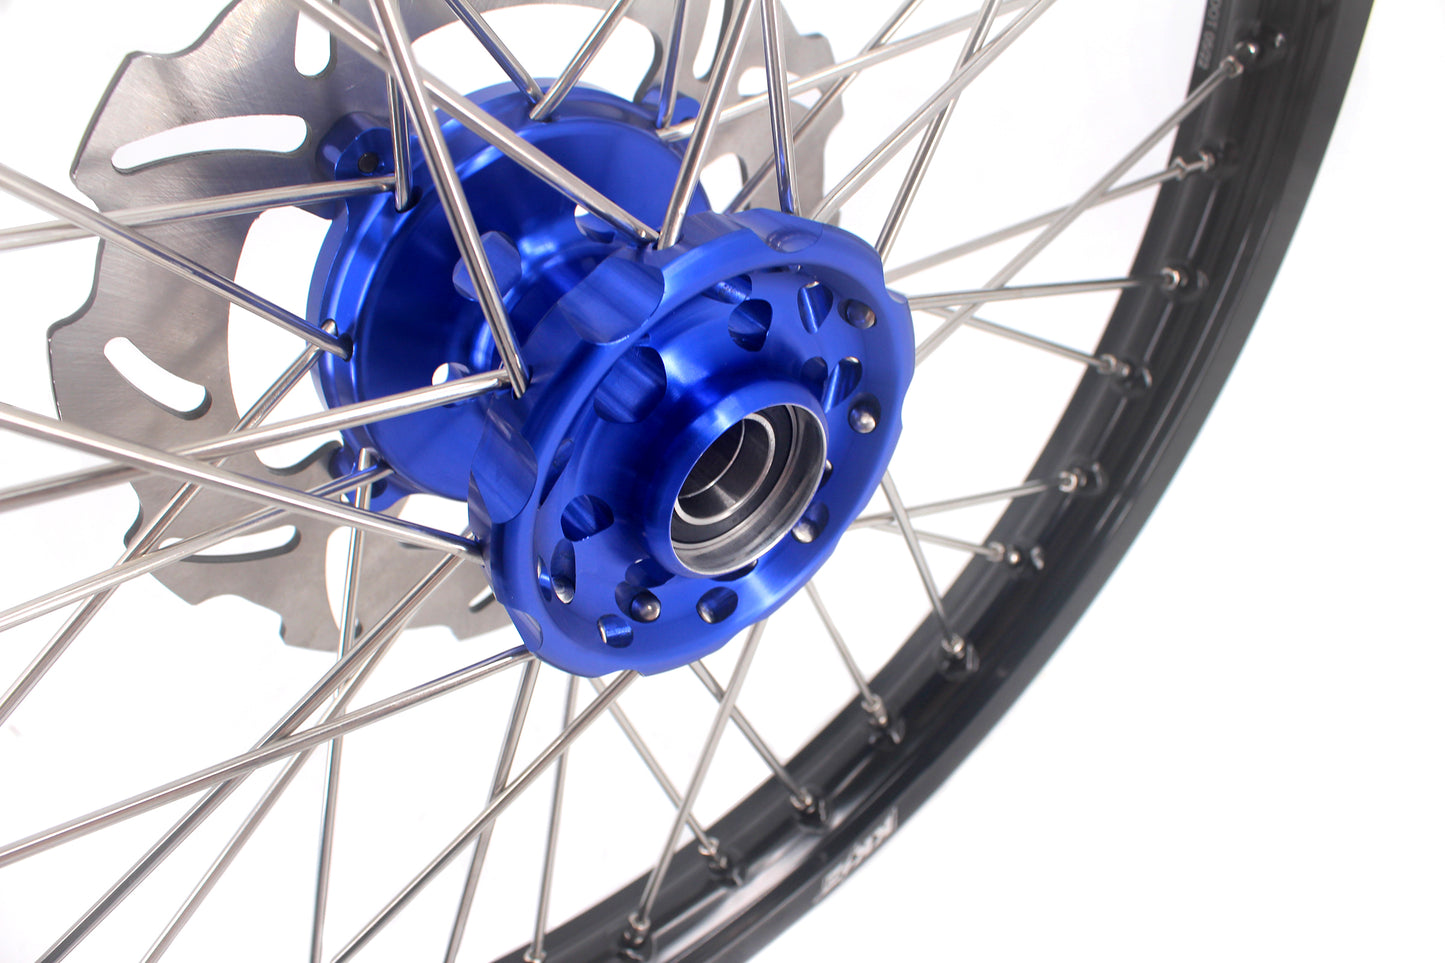 KKE 21 & 18 Motorcycle Dirt Wheels For KAWASAKI KX125 KX250 1993-2002 Blue Hub Disc